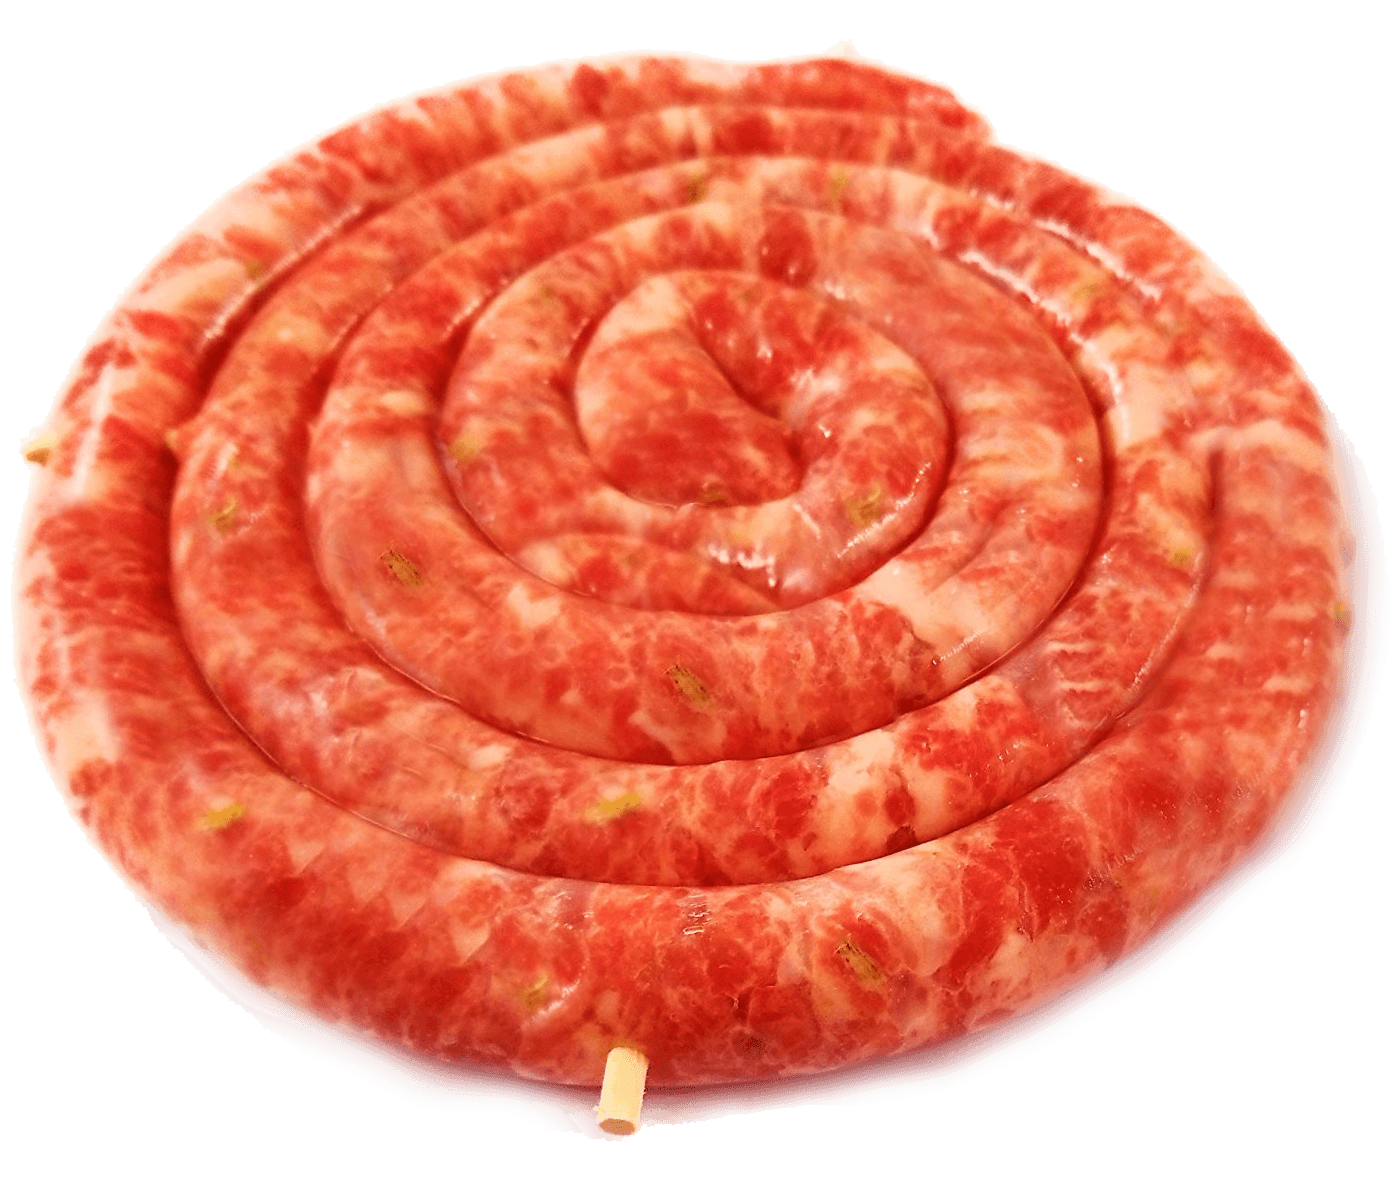 Chevalatta Italian sausage- Made Fresh Daily – 3 Pounds - No Additives. (Pork Sausage With Fennel)